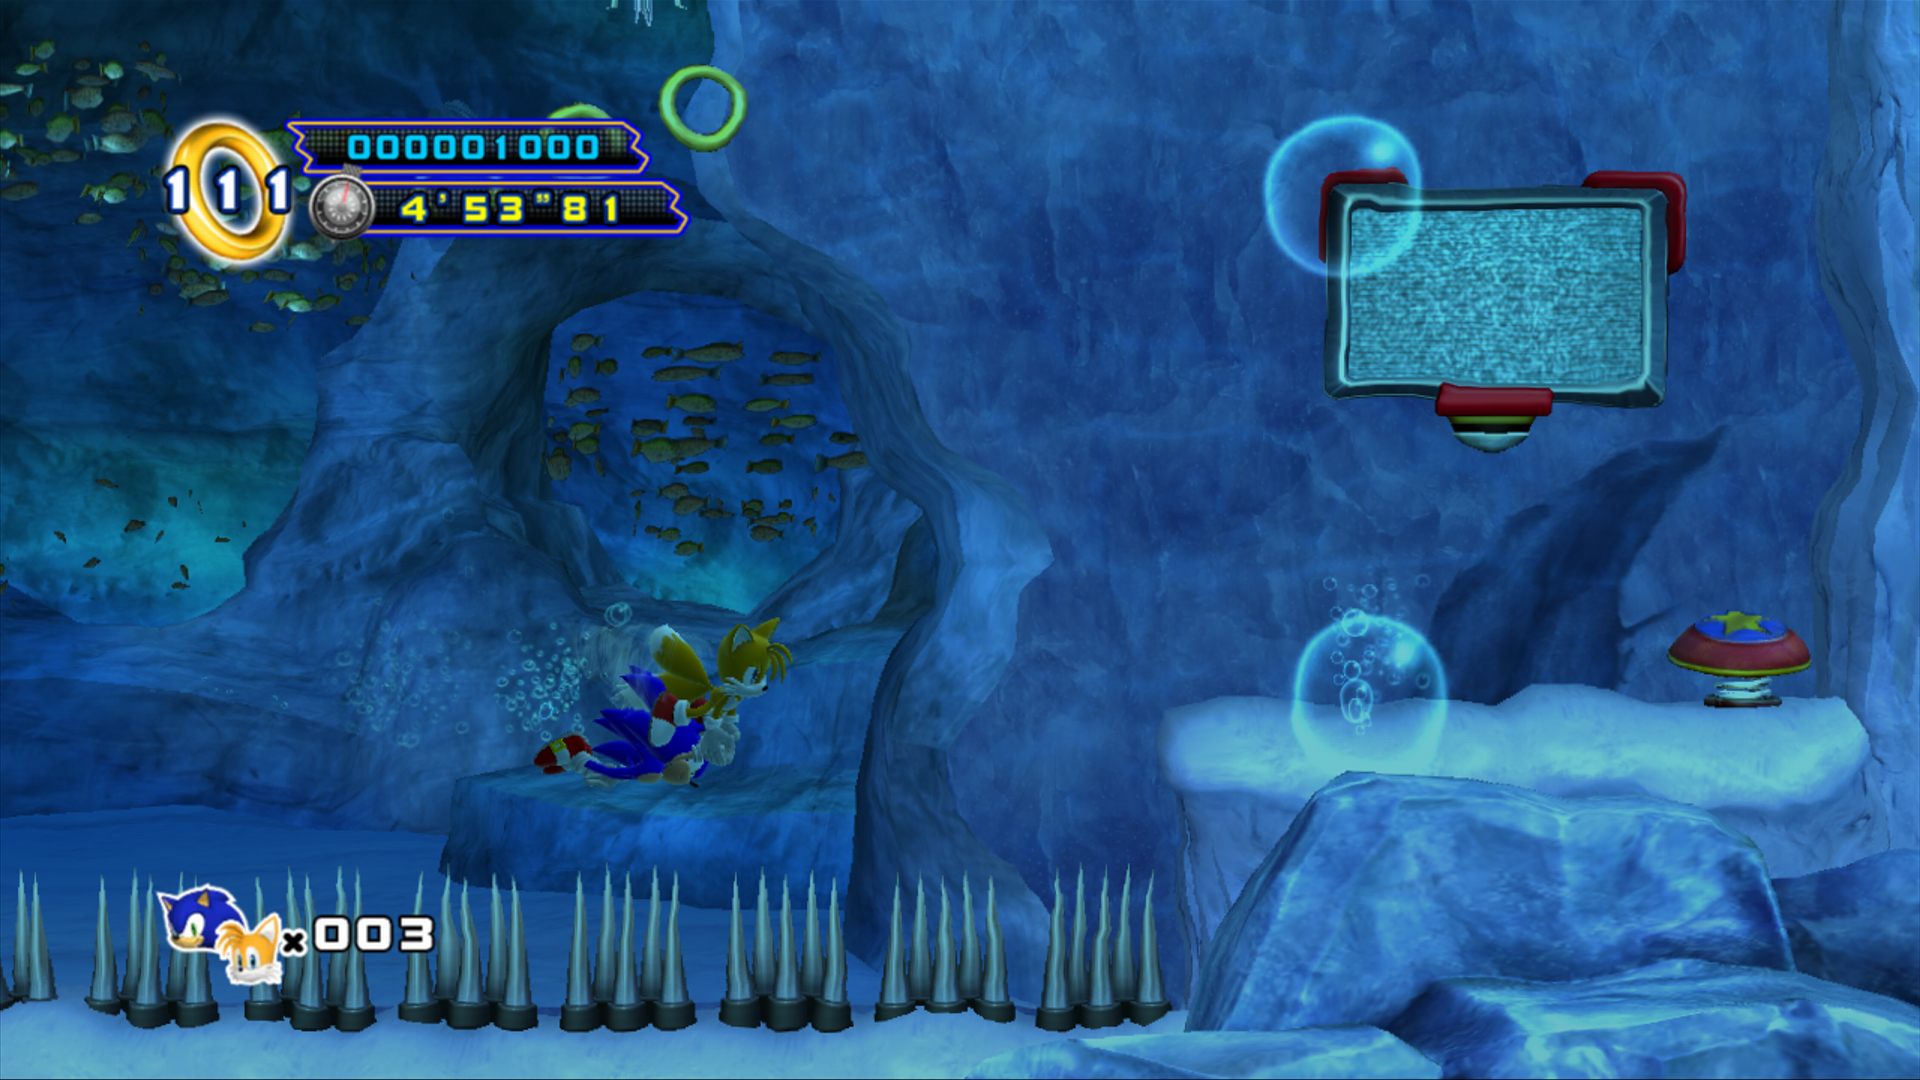 Obrázky ze Sonic the Hedgehog 4: Episode 2 62115